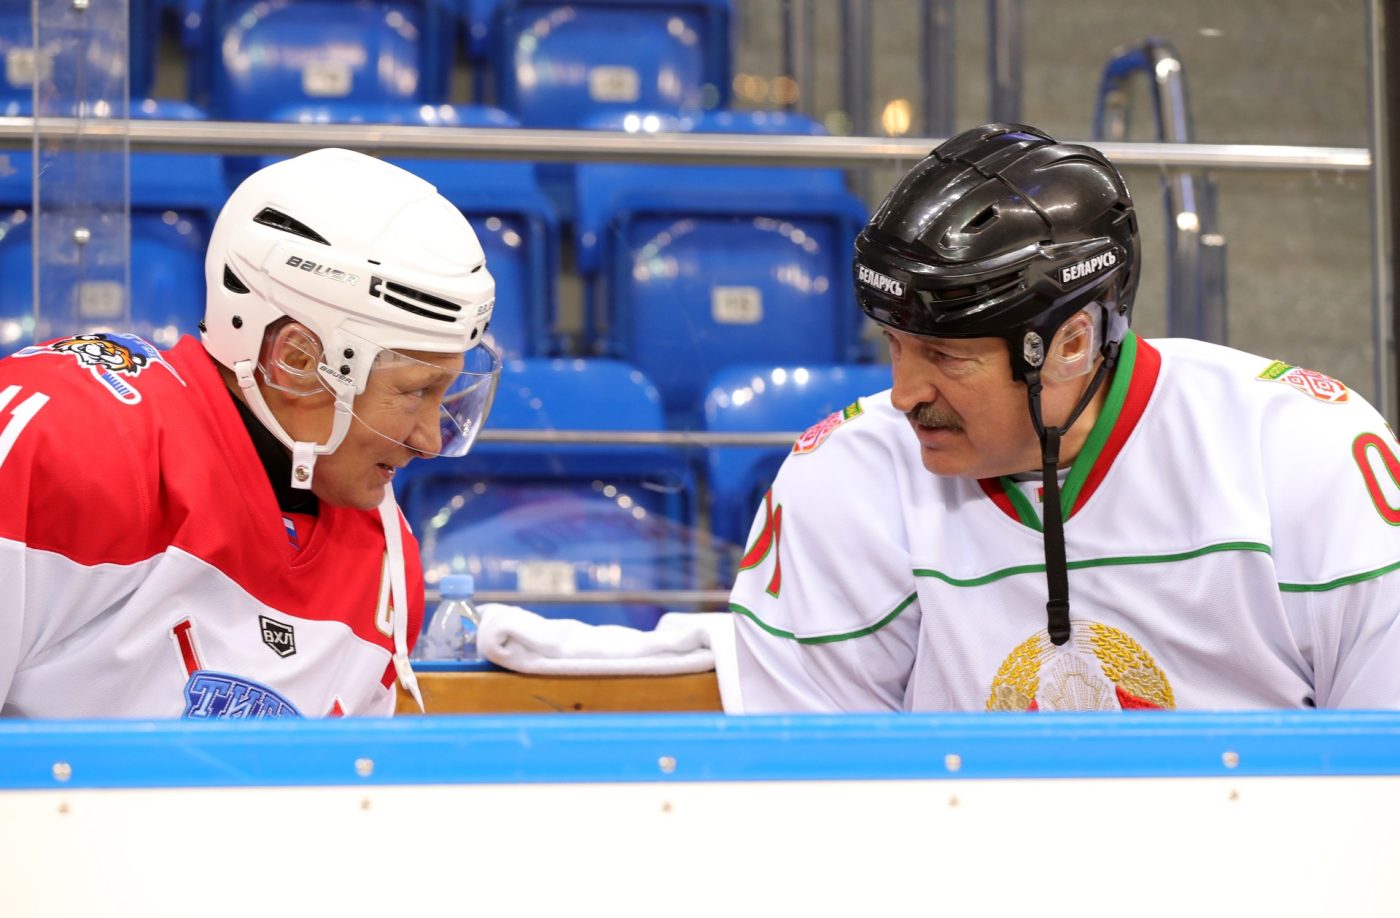 Photo: "Vladimir Putin and Alexander Lukashenko took part in an ice hockey game" via the Kremlin under CC BY 4.0.